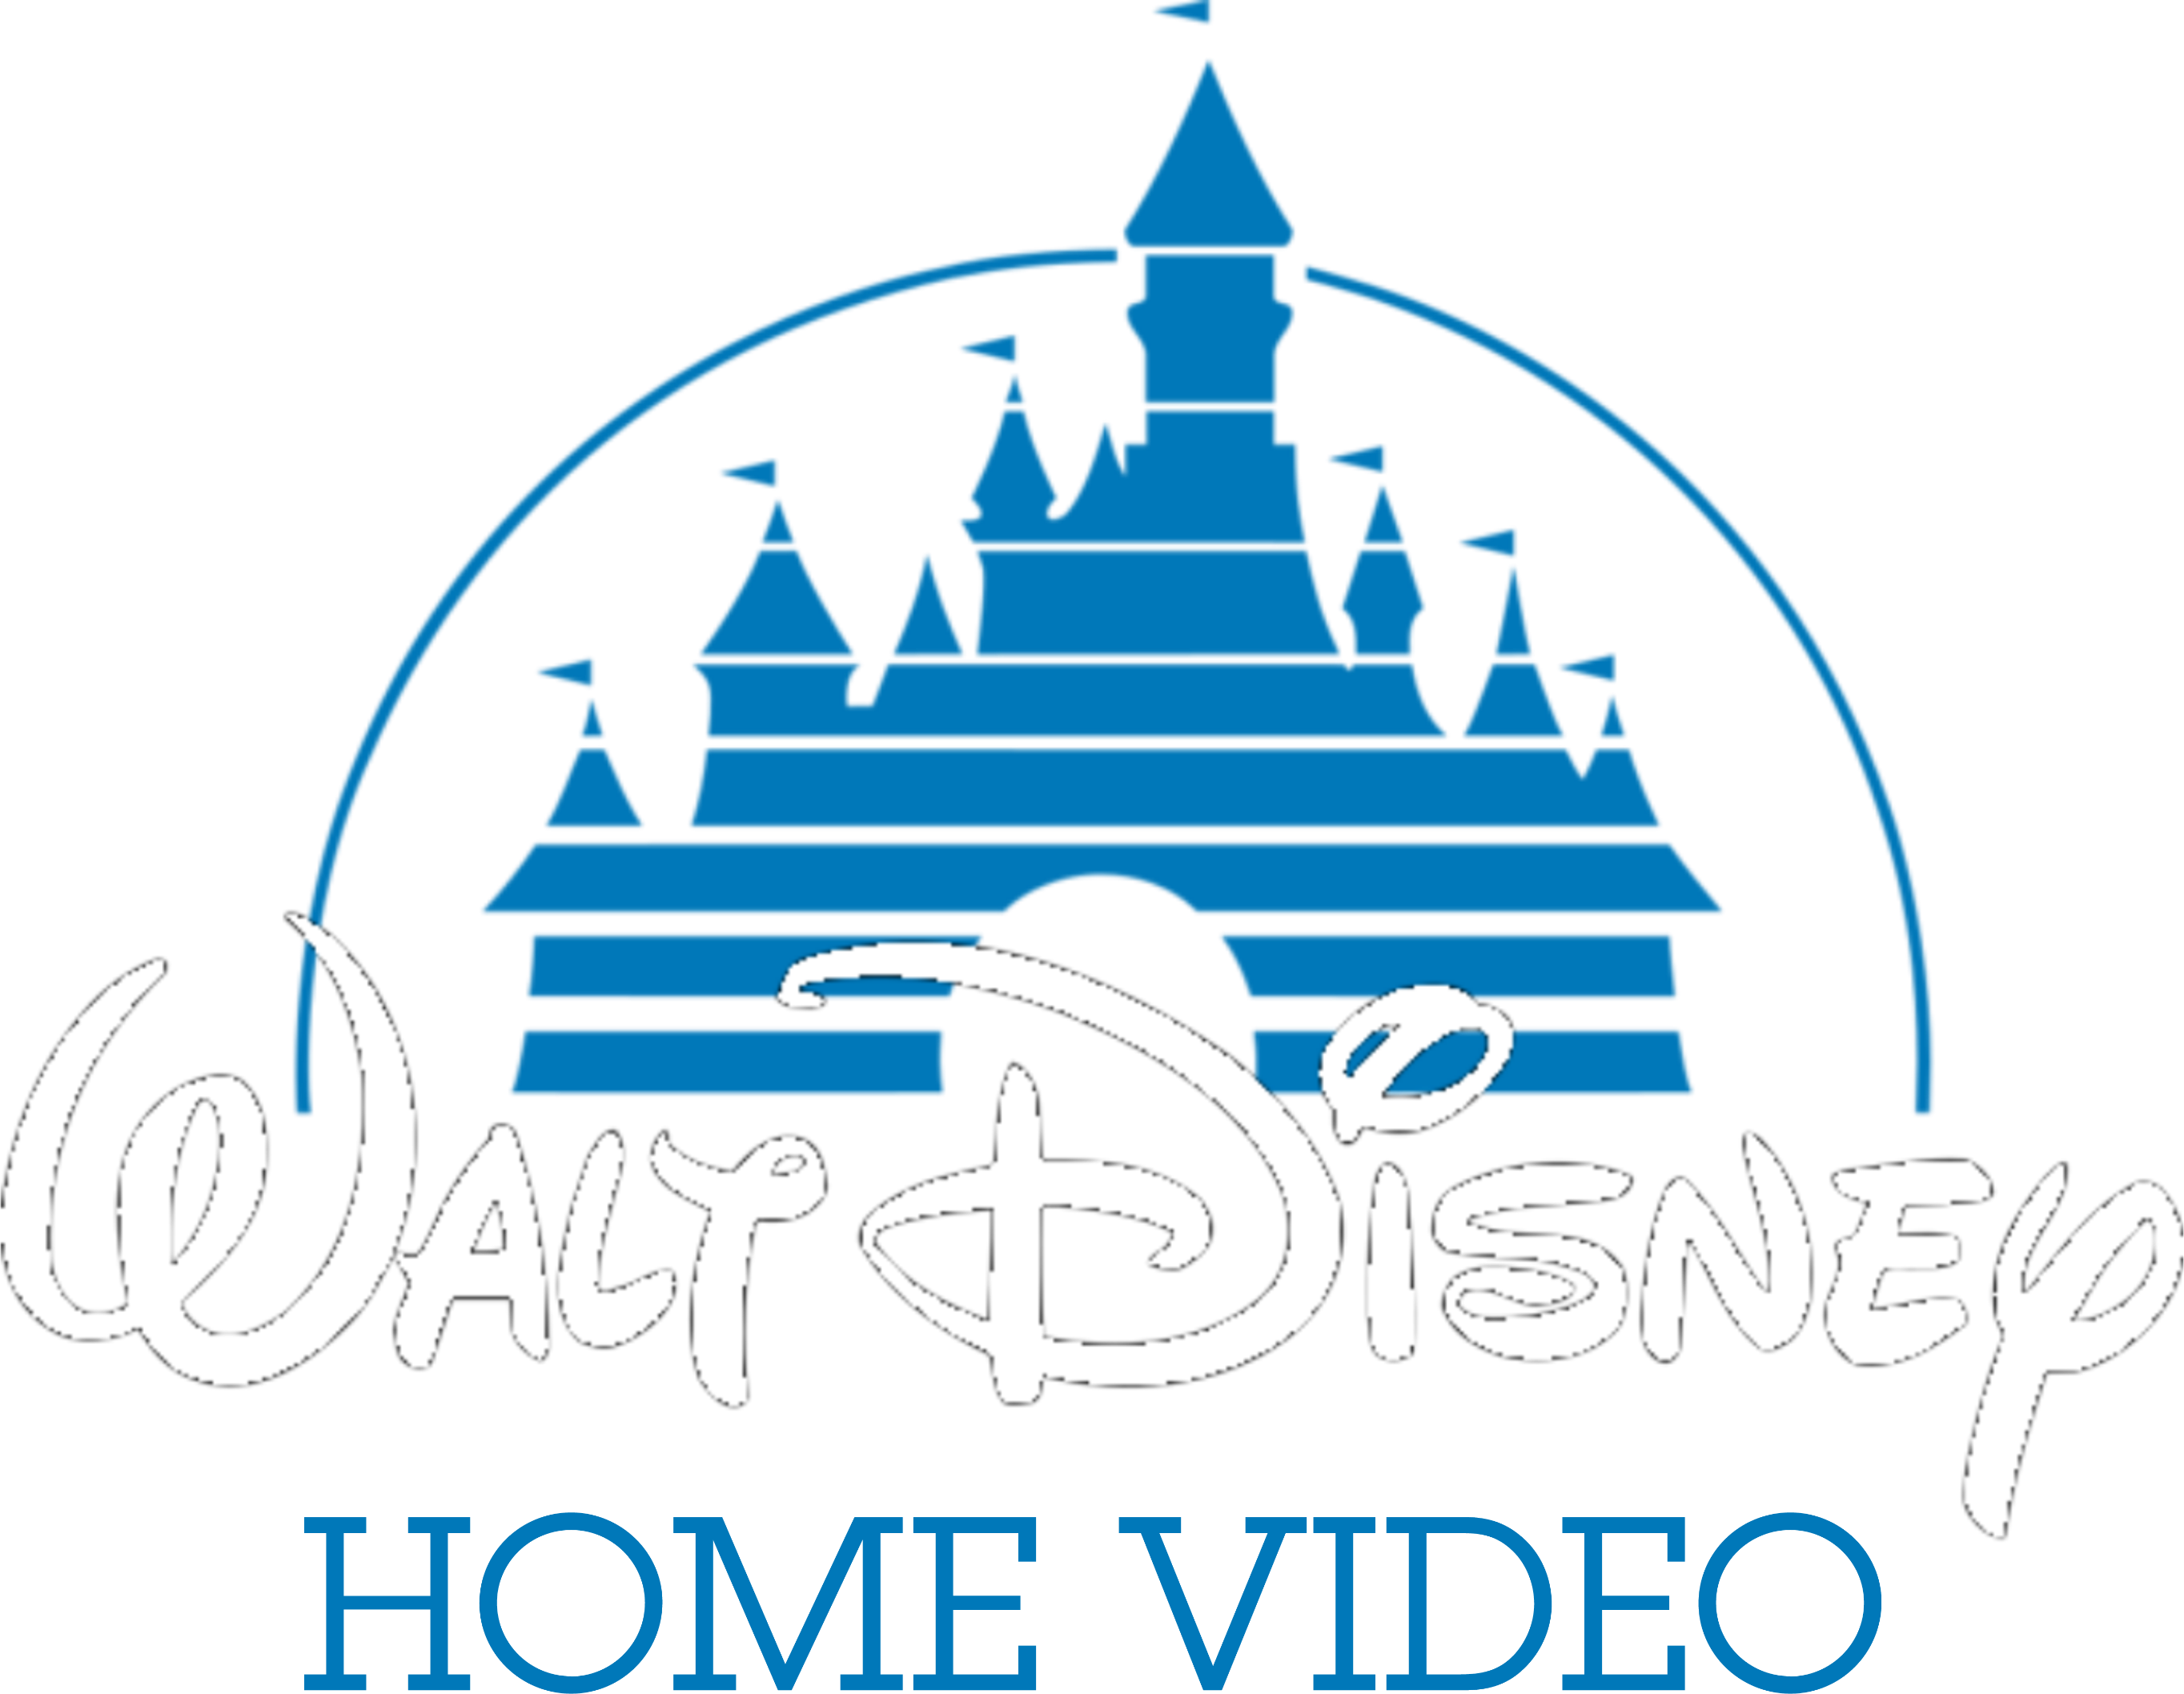 Walt Disney Home Video Logo PNG Transparent & SVG Vector - Freebie